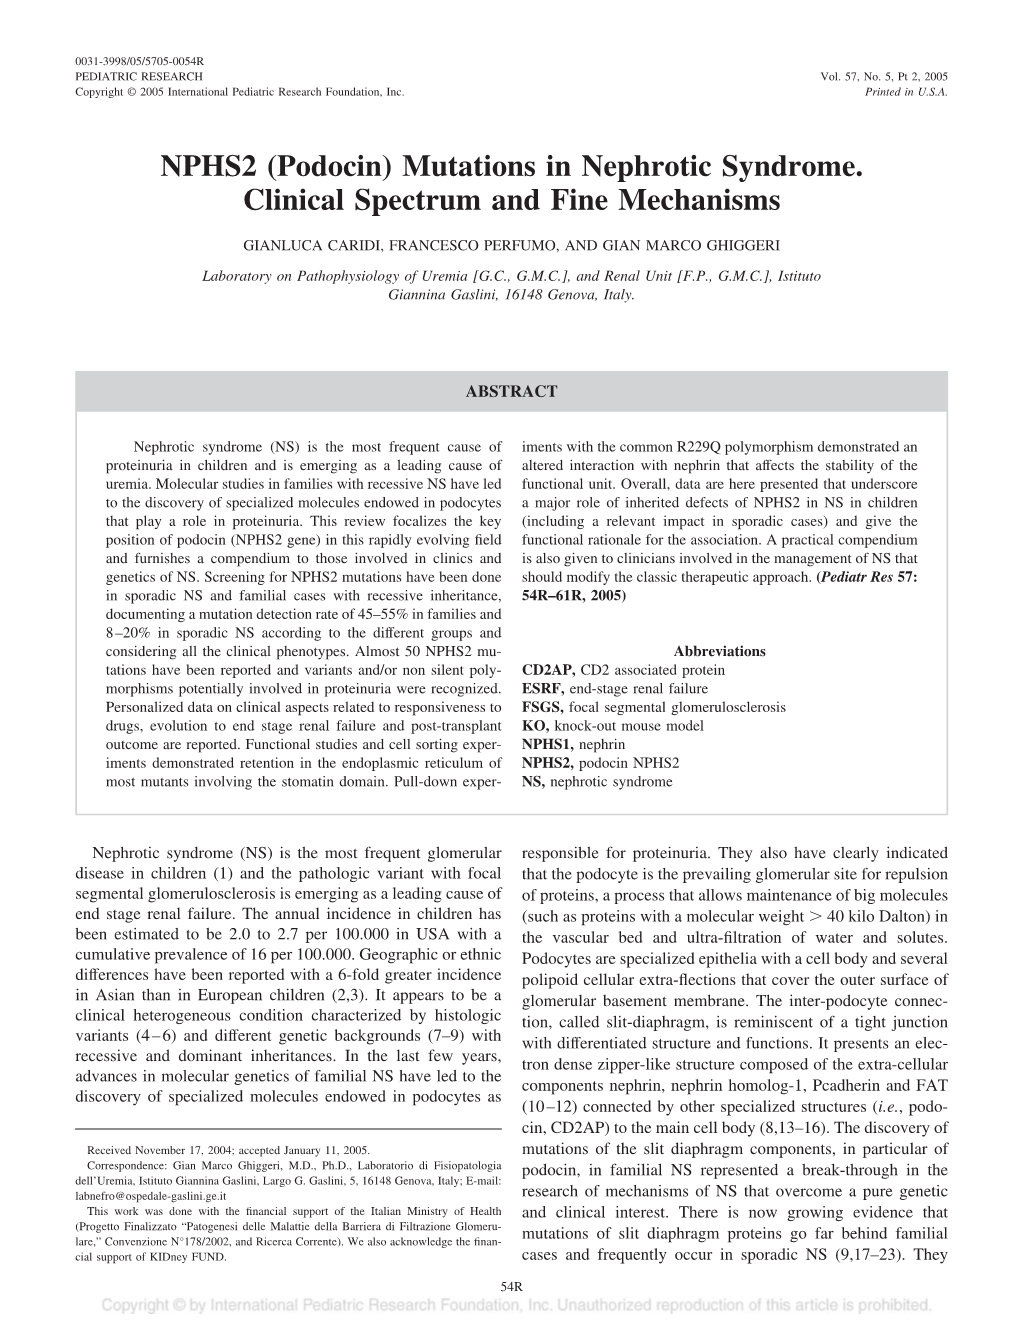 NPHS2 (Podocin) Mutations in Nephrotic Syndrome